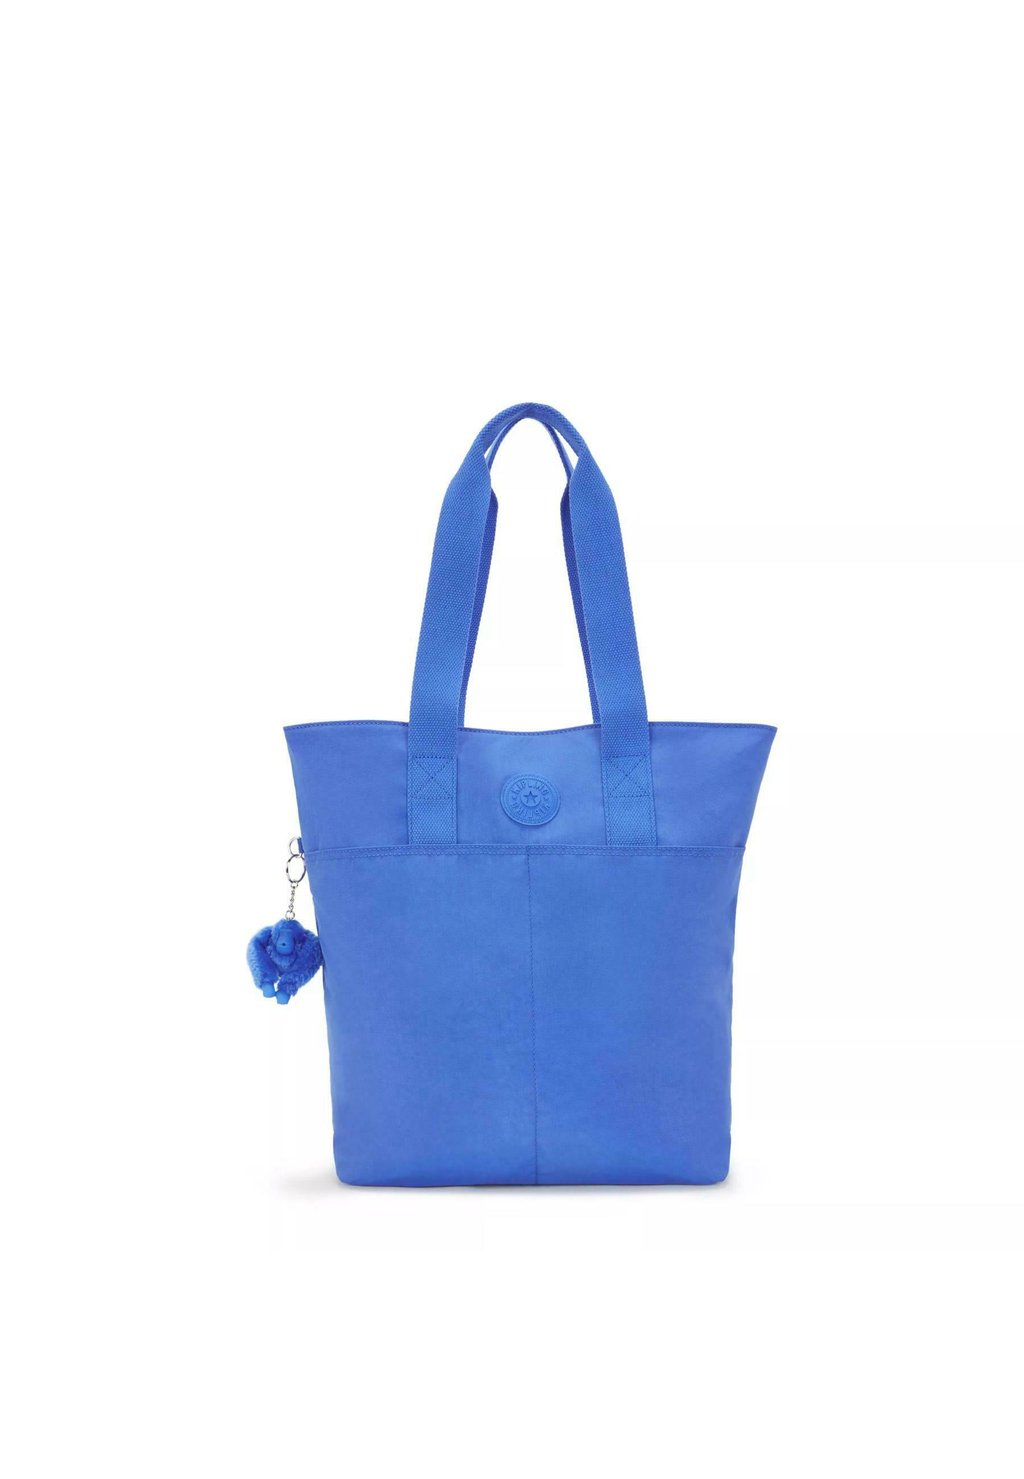 Сумка для покупок Kipling, Гавана синяя сумка для покупок 38х58см полиэстер синяя